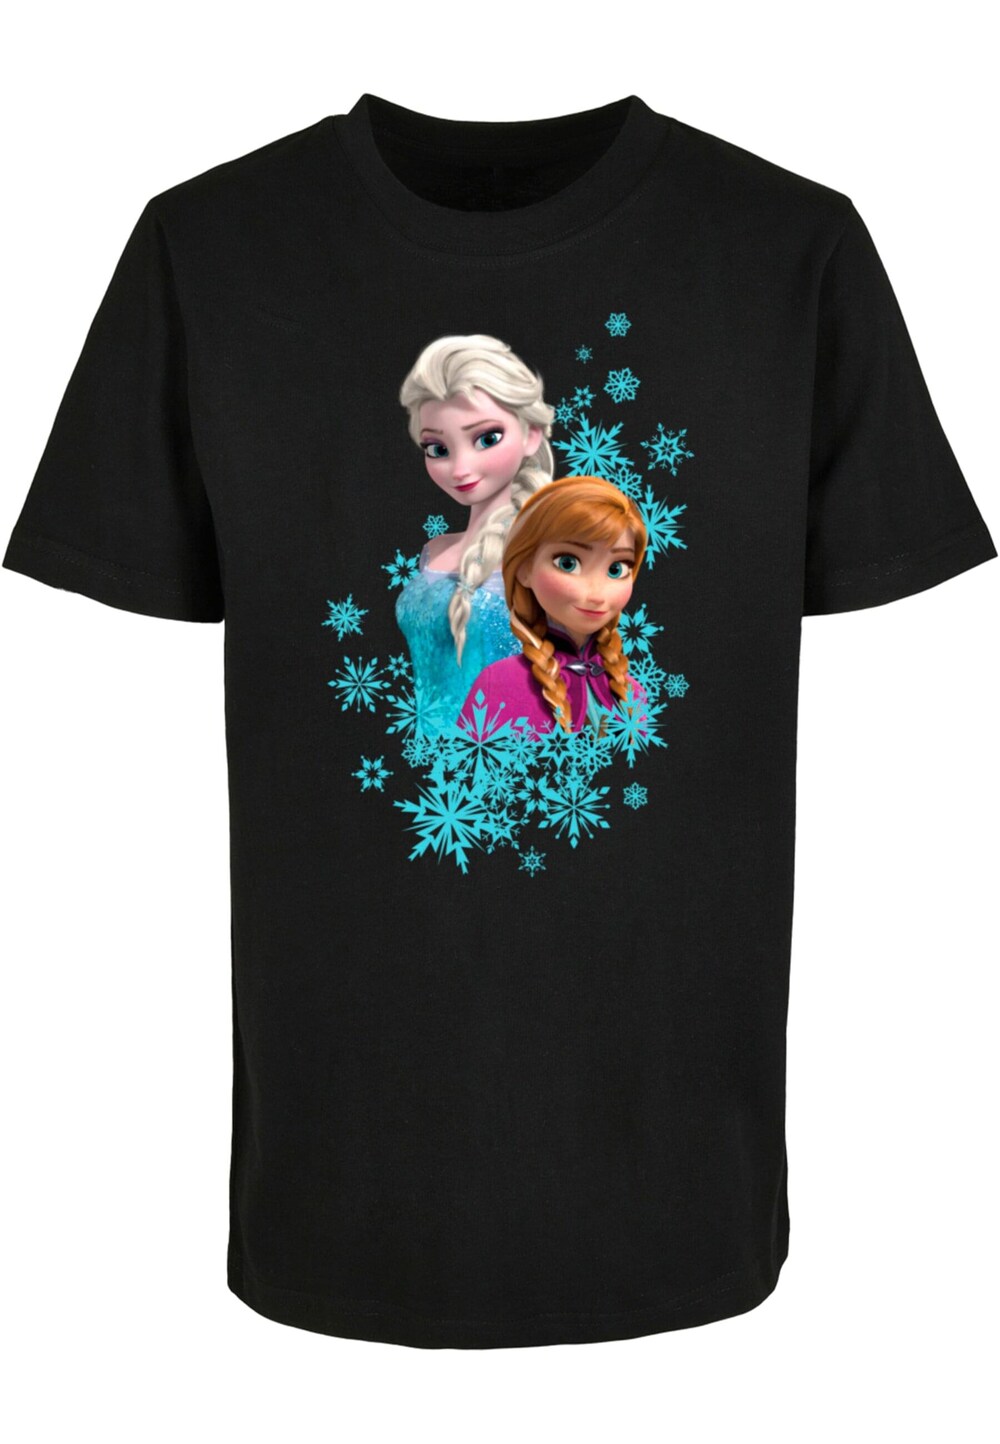 Футболка ABSOLUTE CULT Frozen - Elsa And Anna Sisters, черный